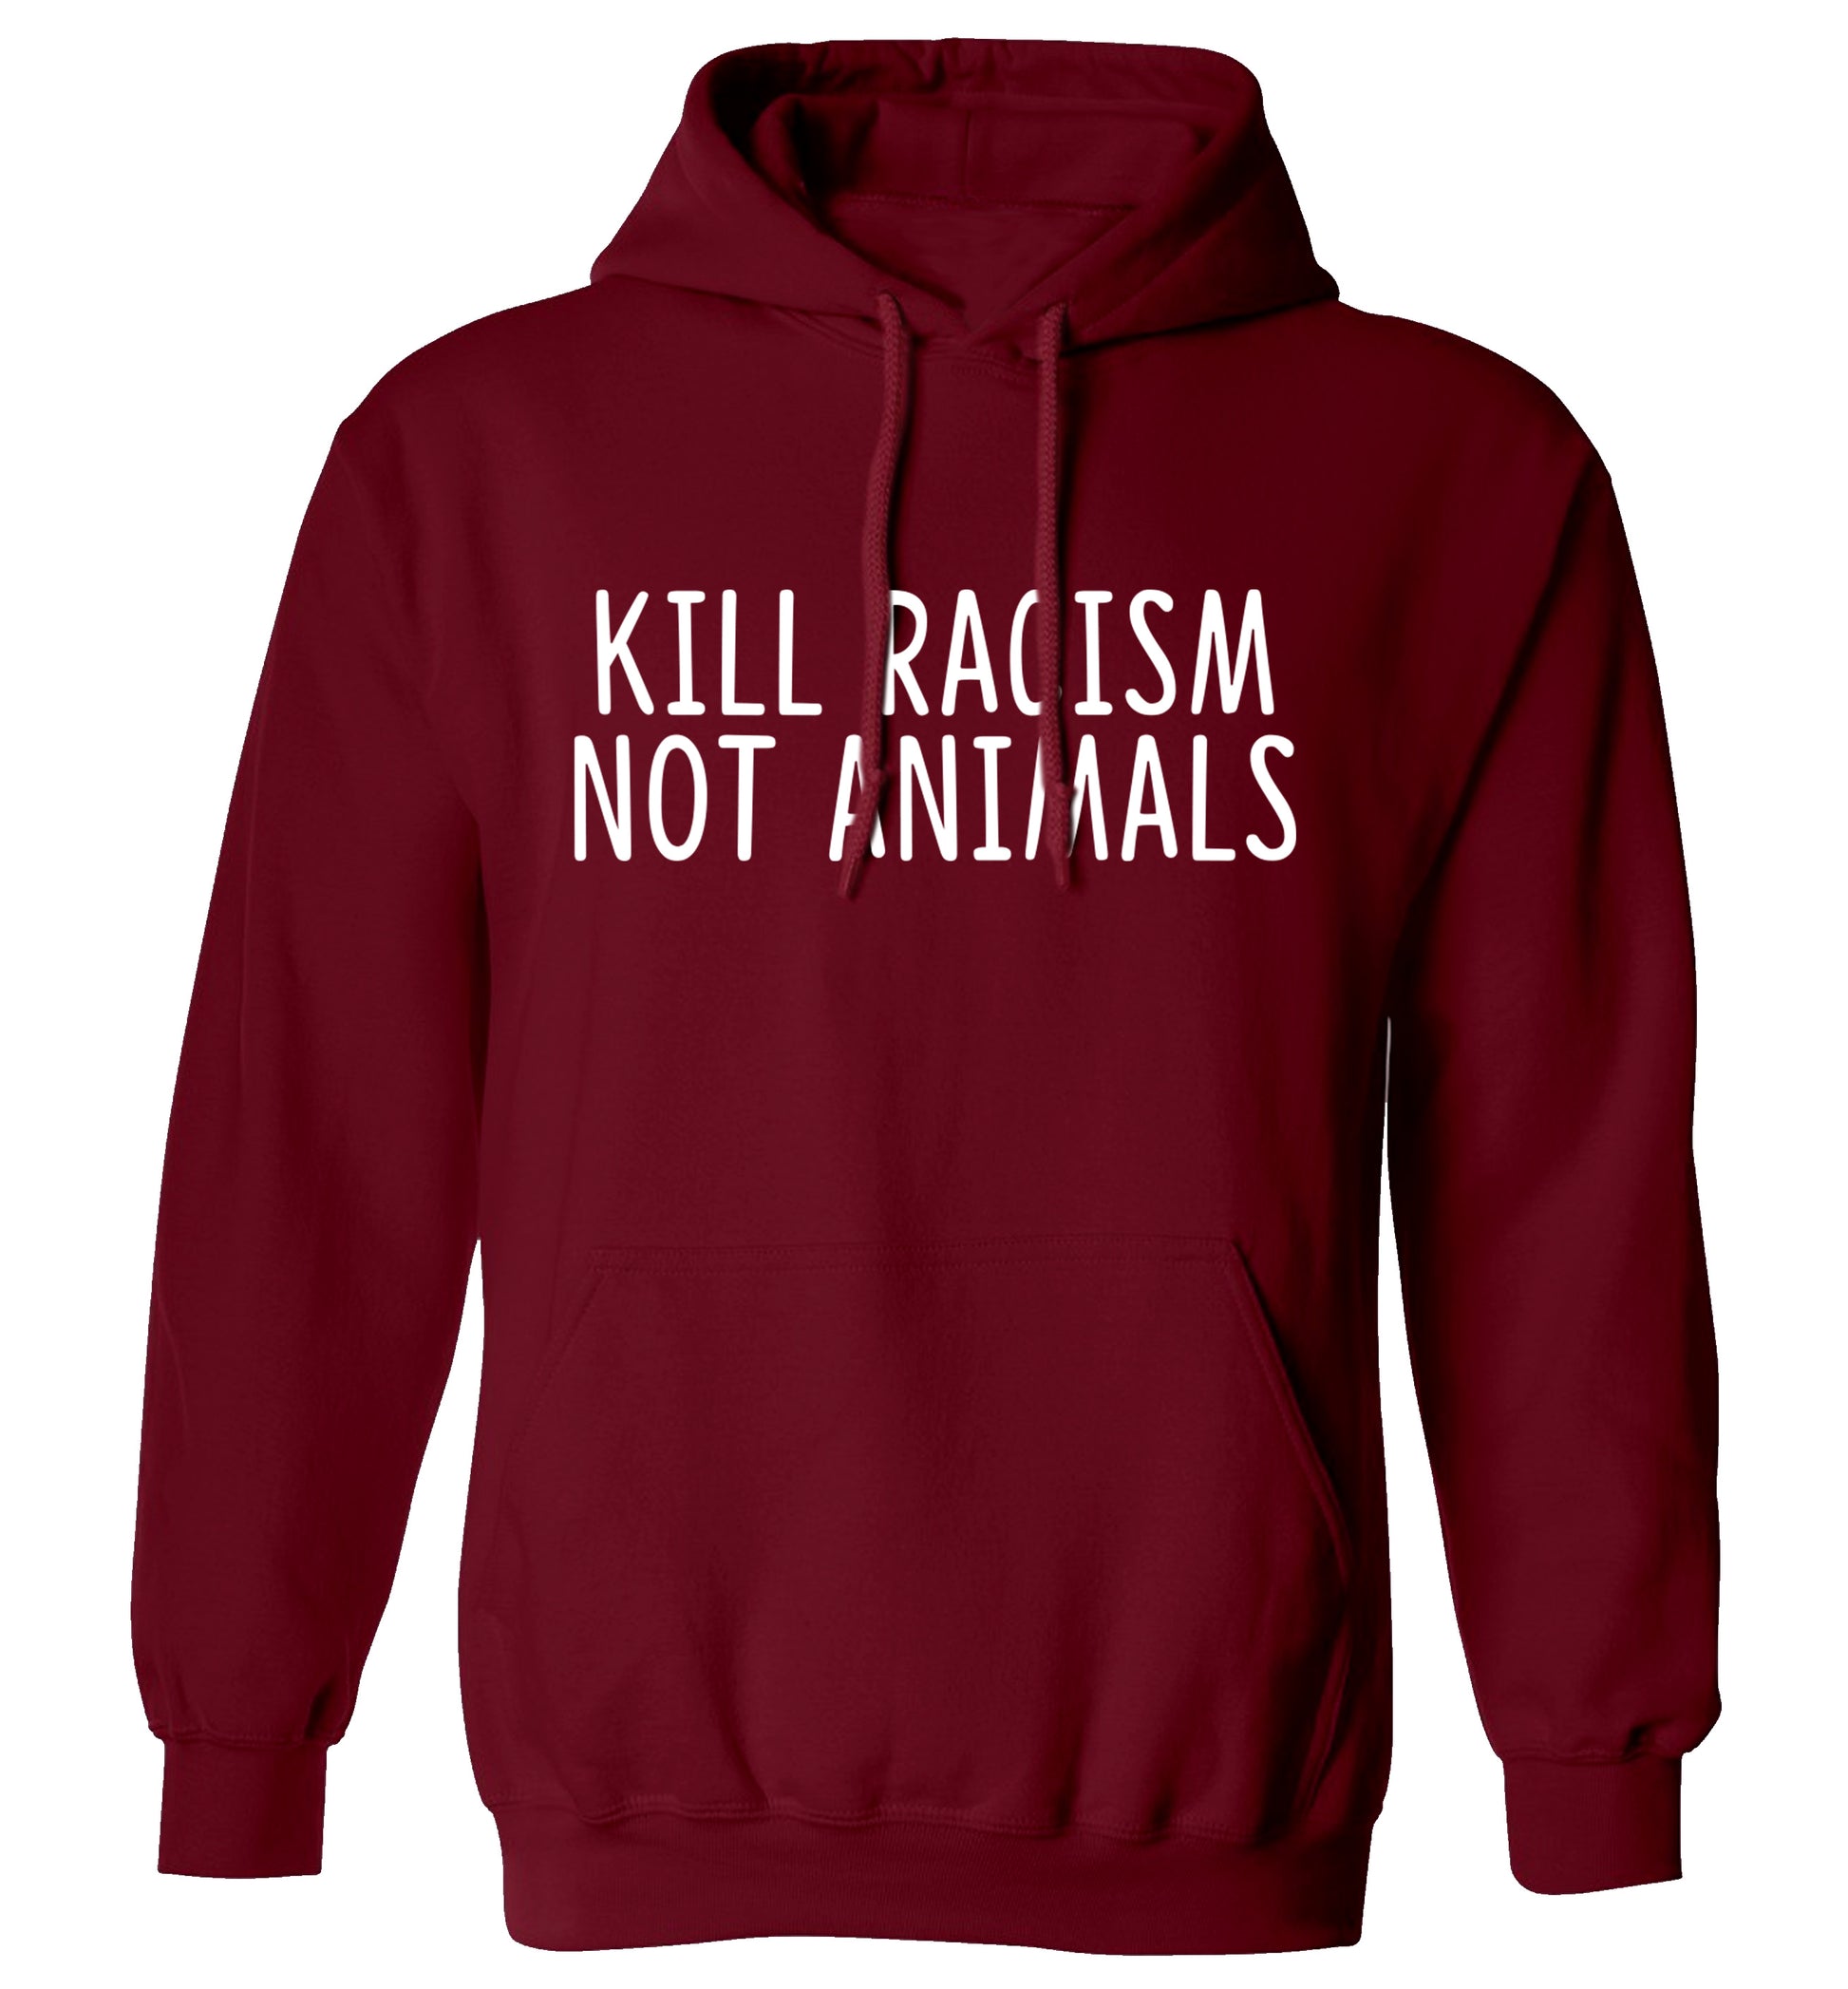 Kill Racism Not Animals adults unisex maroon hoodie 2XL